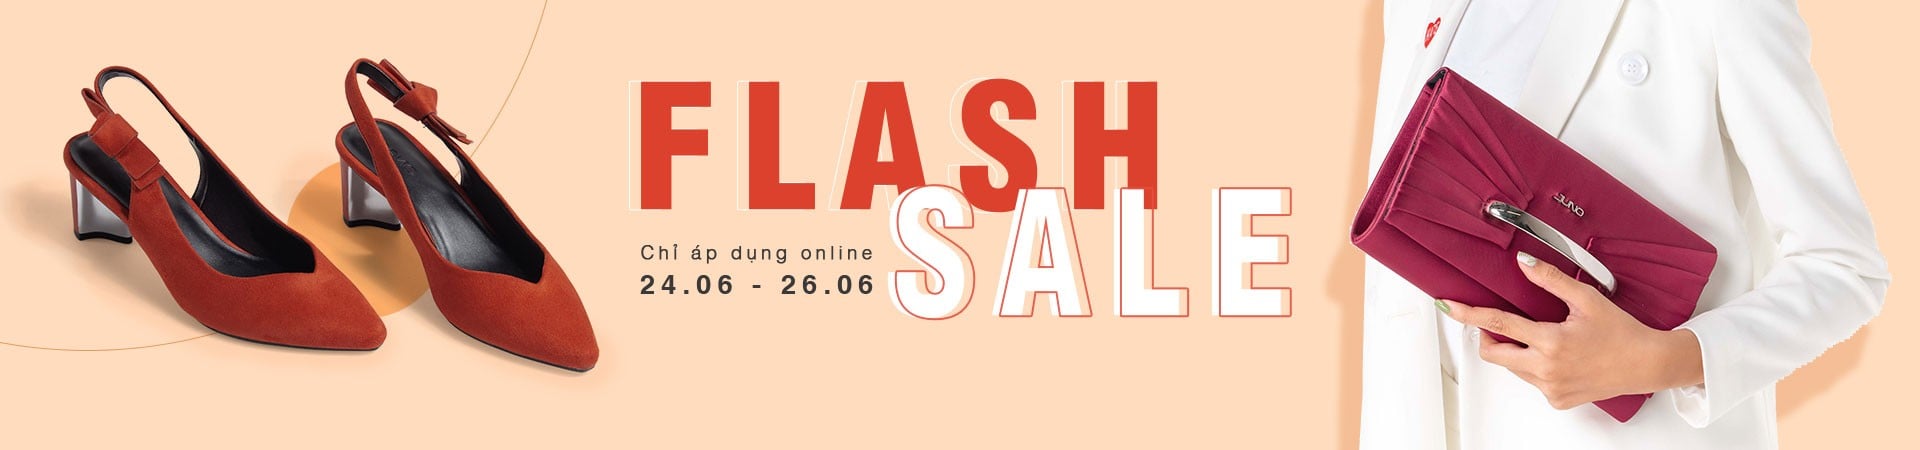 Flash Sale Onlie đồng giá từ 149k